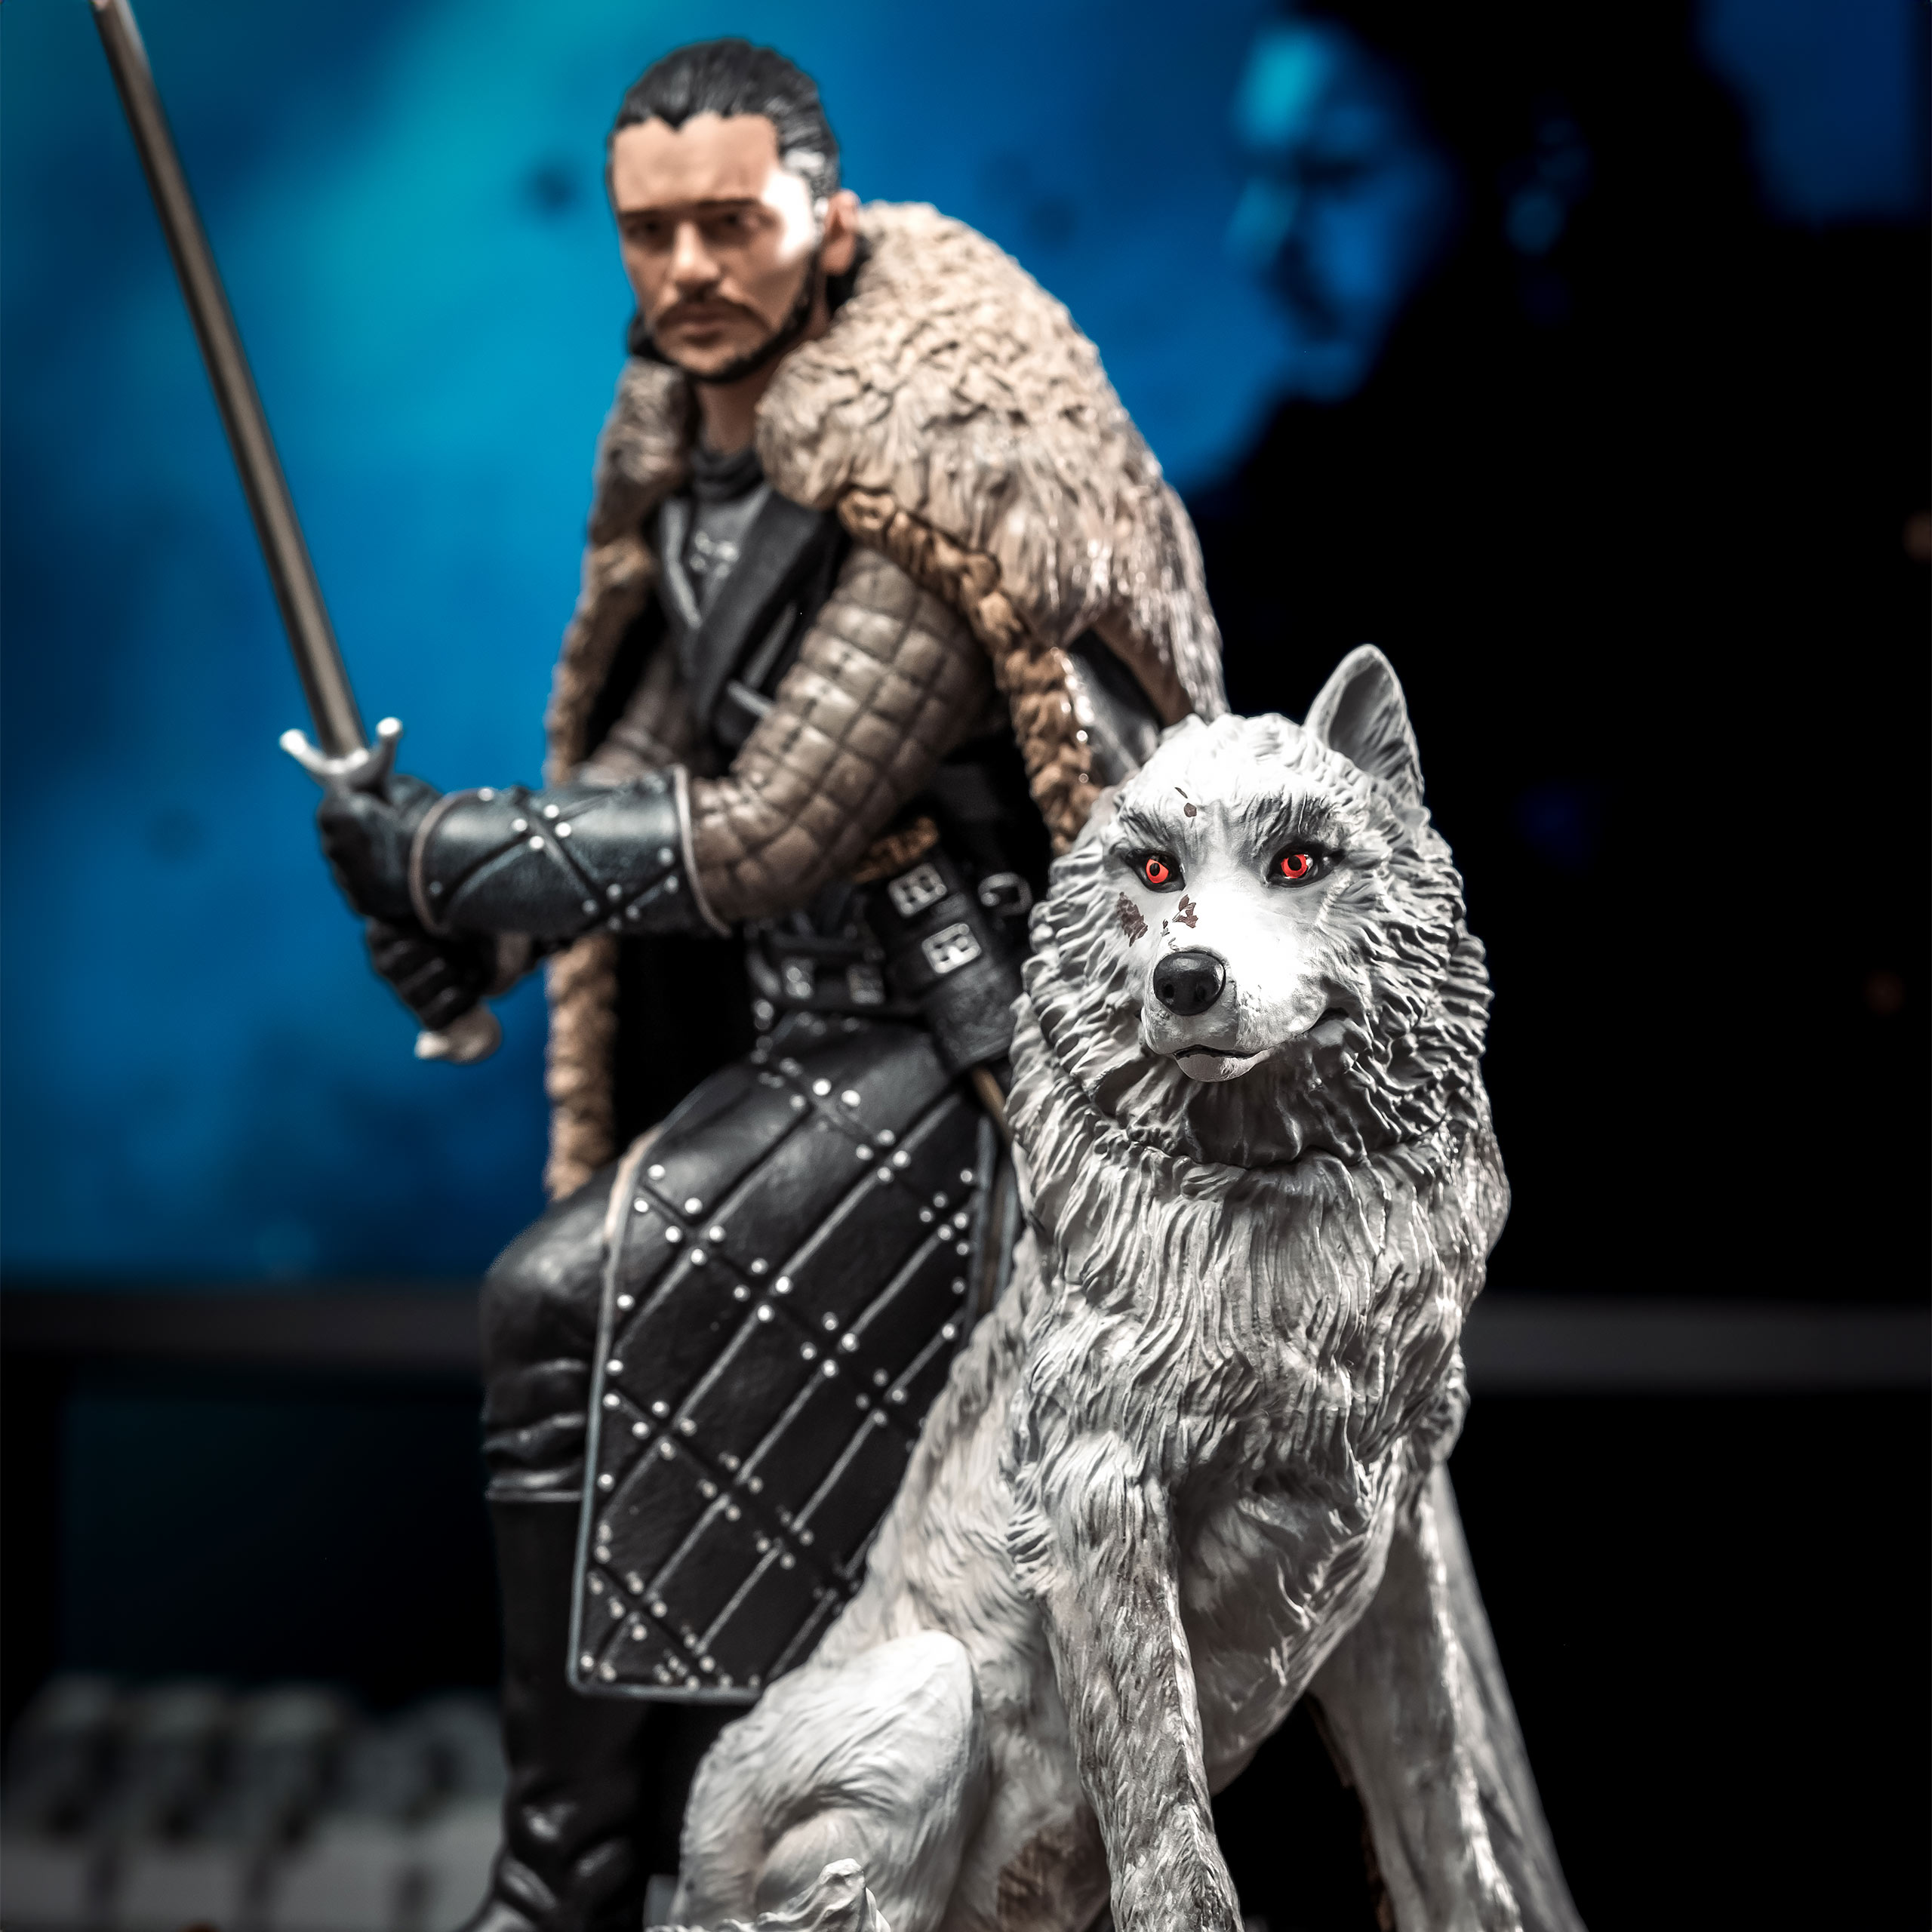 Game of Thrones - Statue de Jon Snow avec Ghost